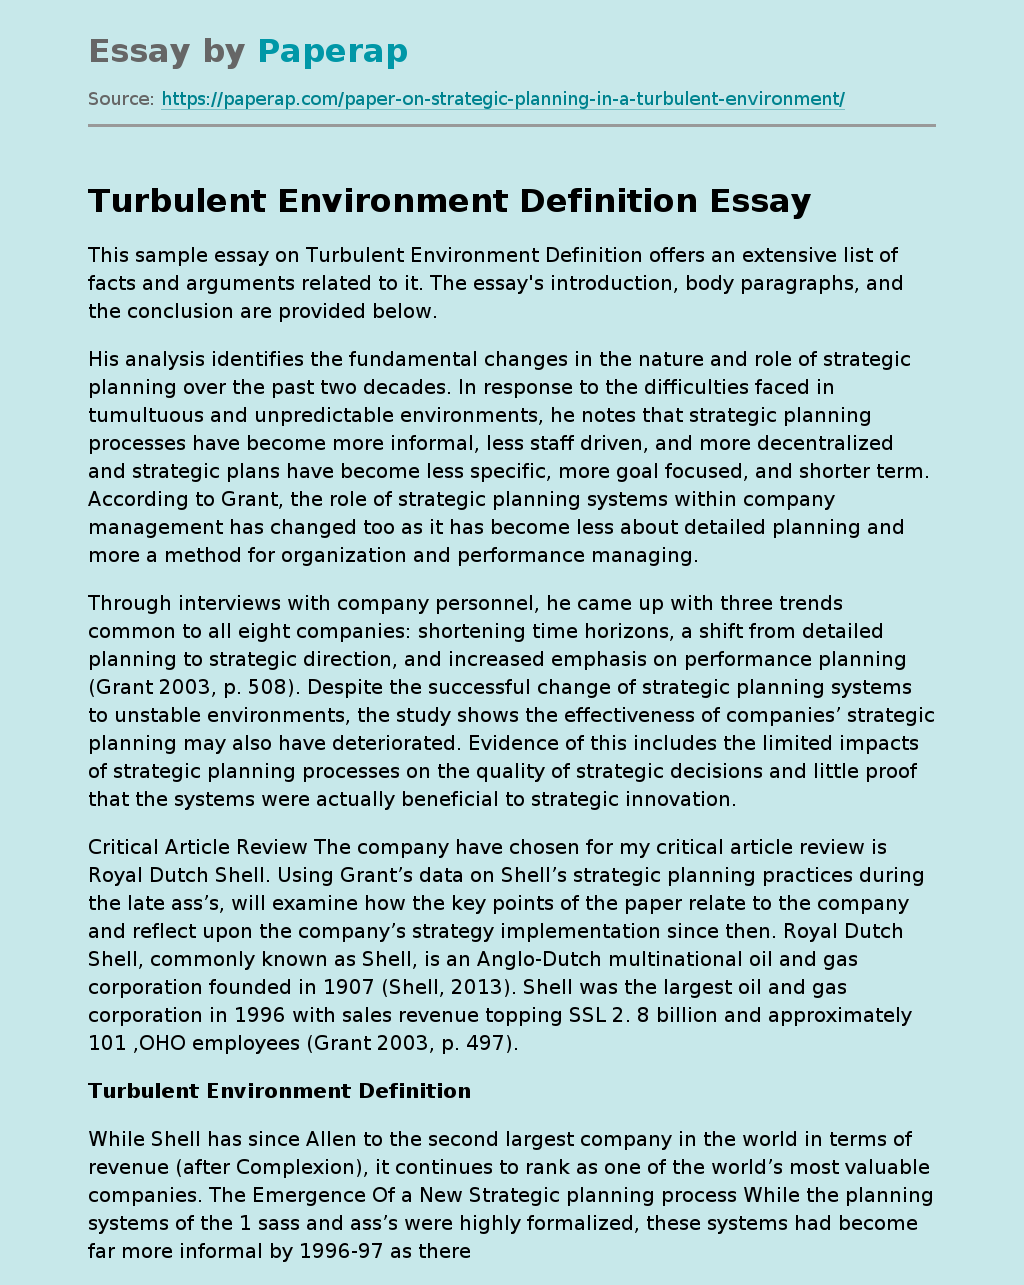 Turbulent Environment Definition